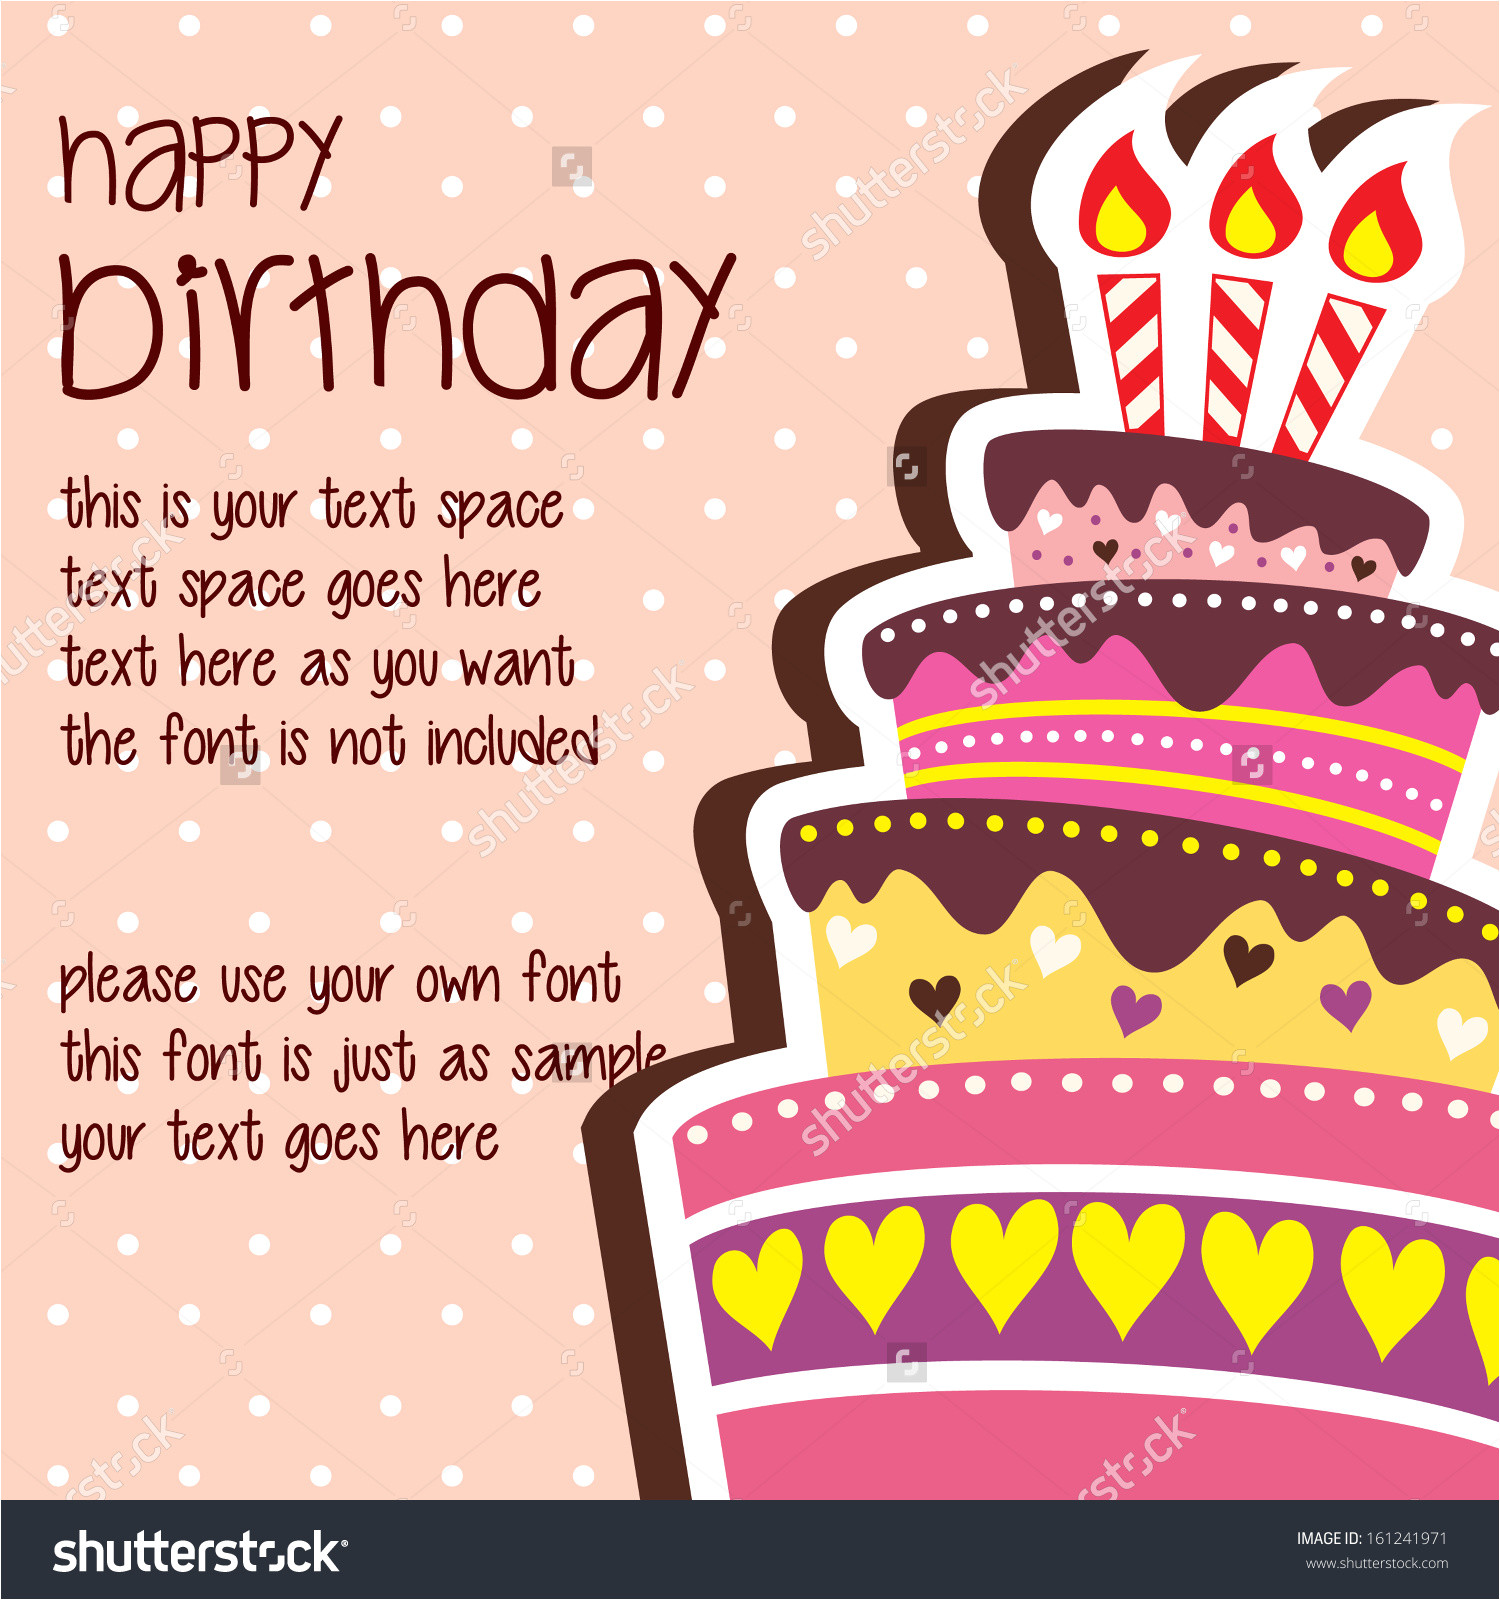 free virtual birthday card